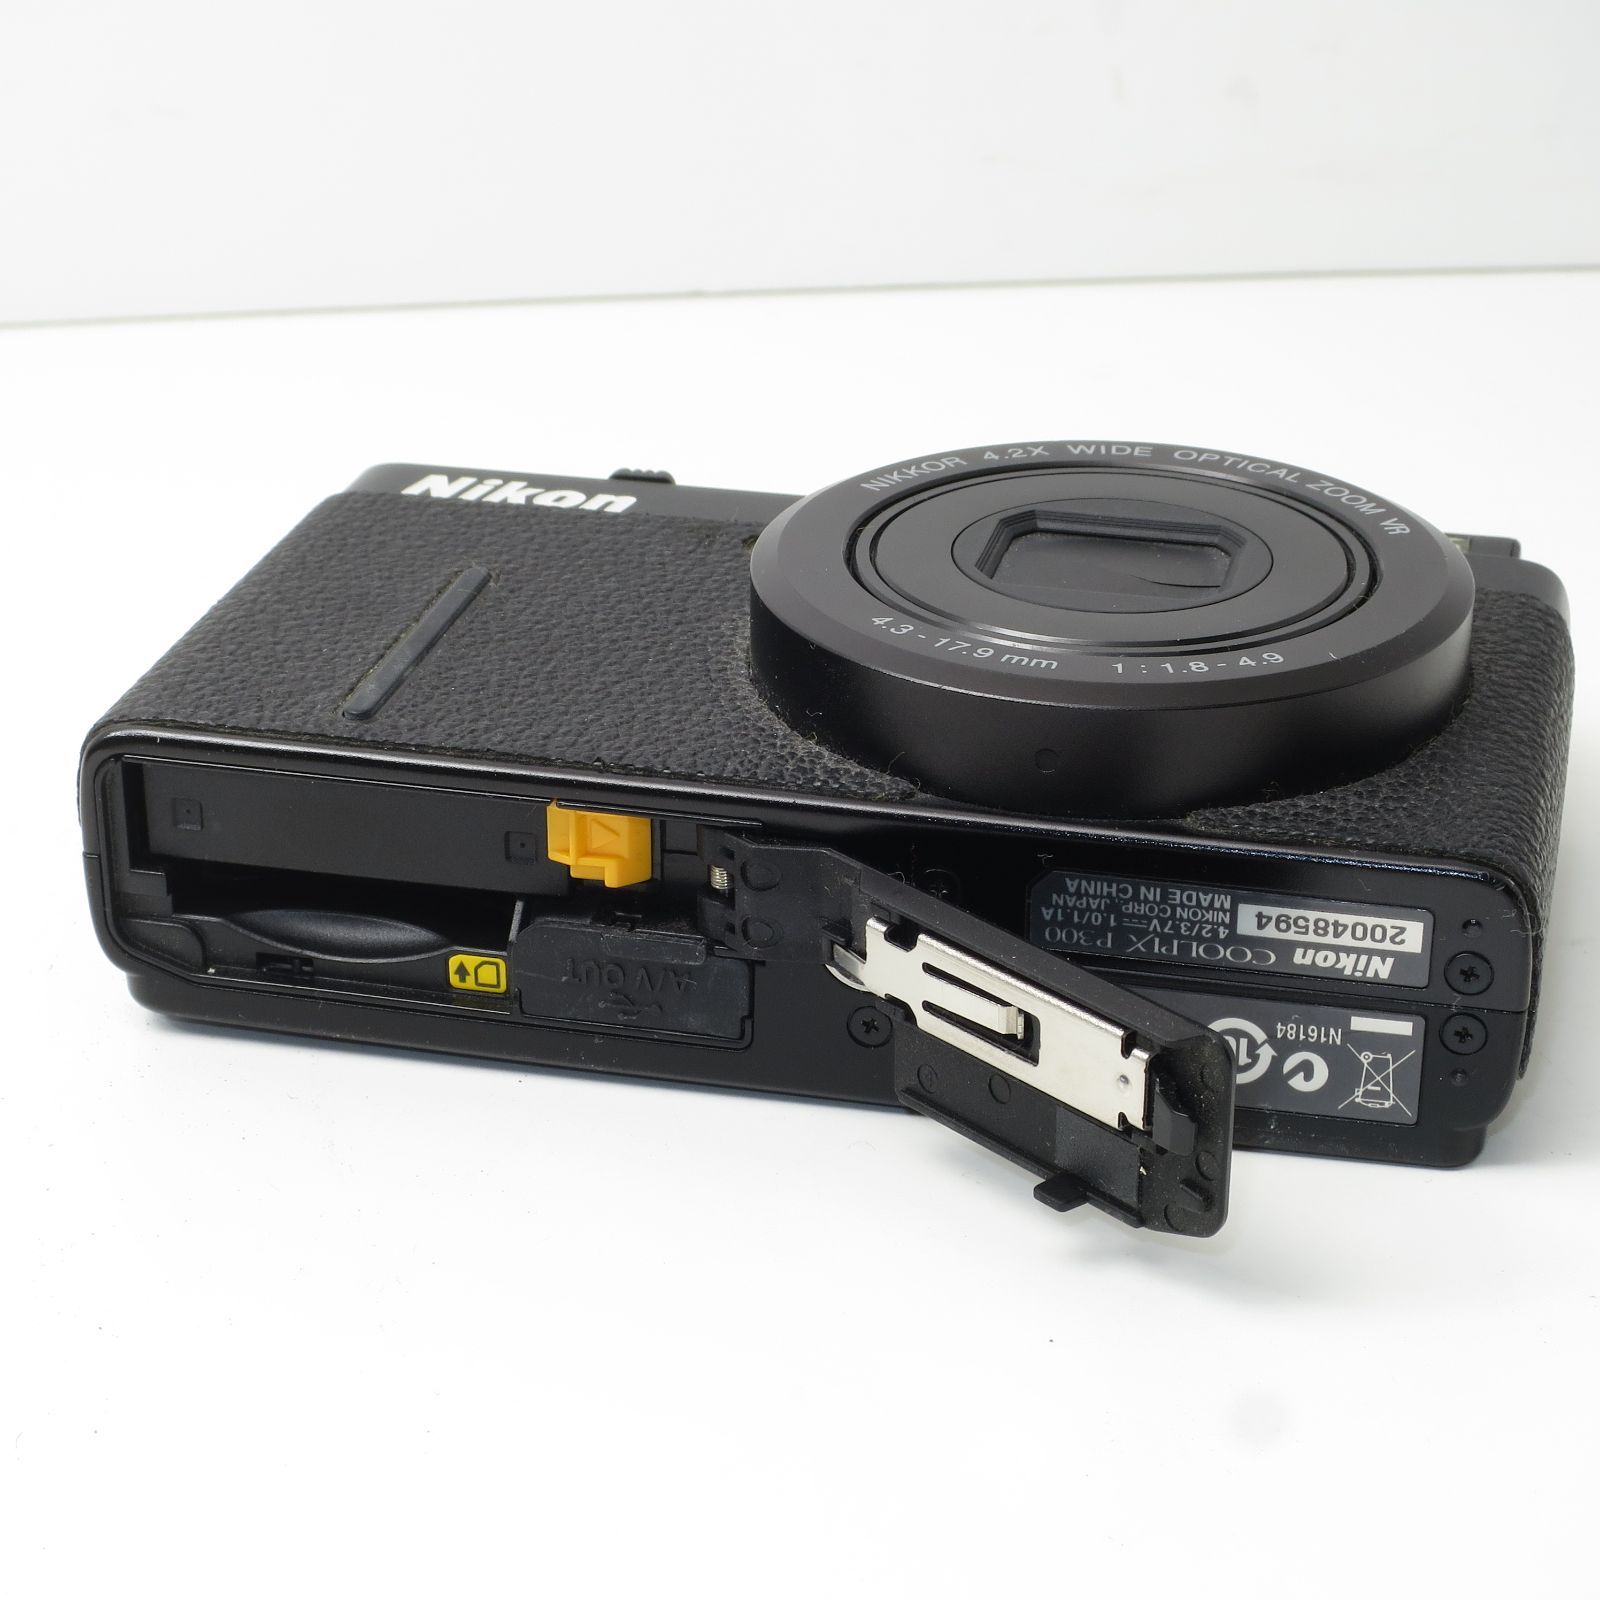 NikonデジタルカメラCOOLPIX P300 ブラックP300 1220万画素 裏面照射